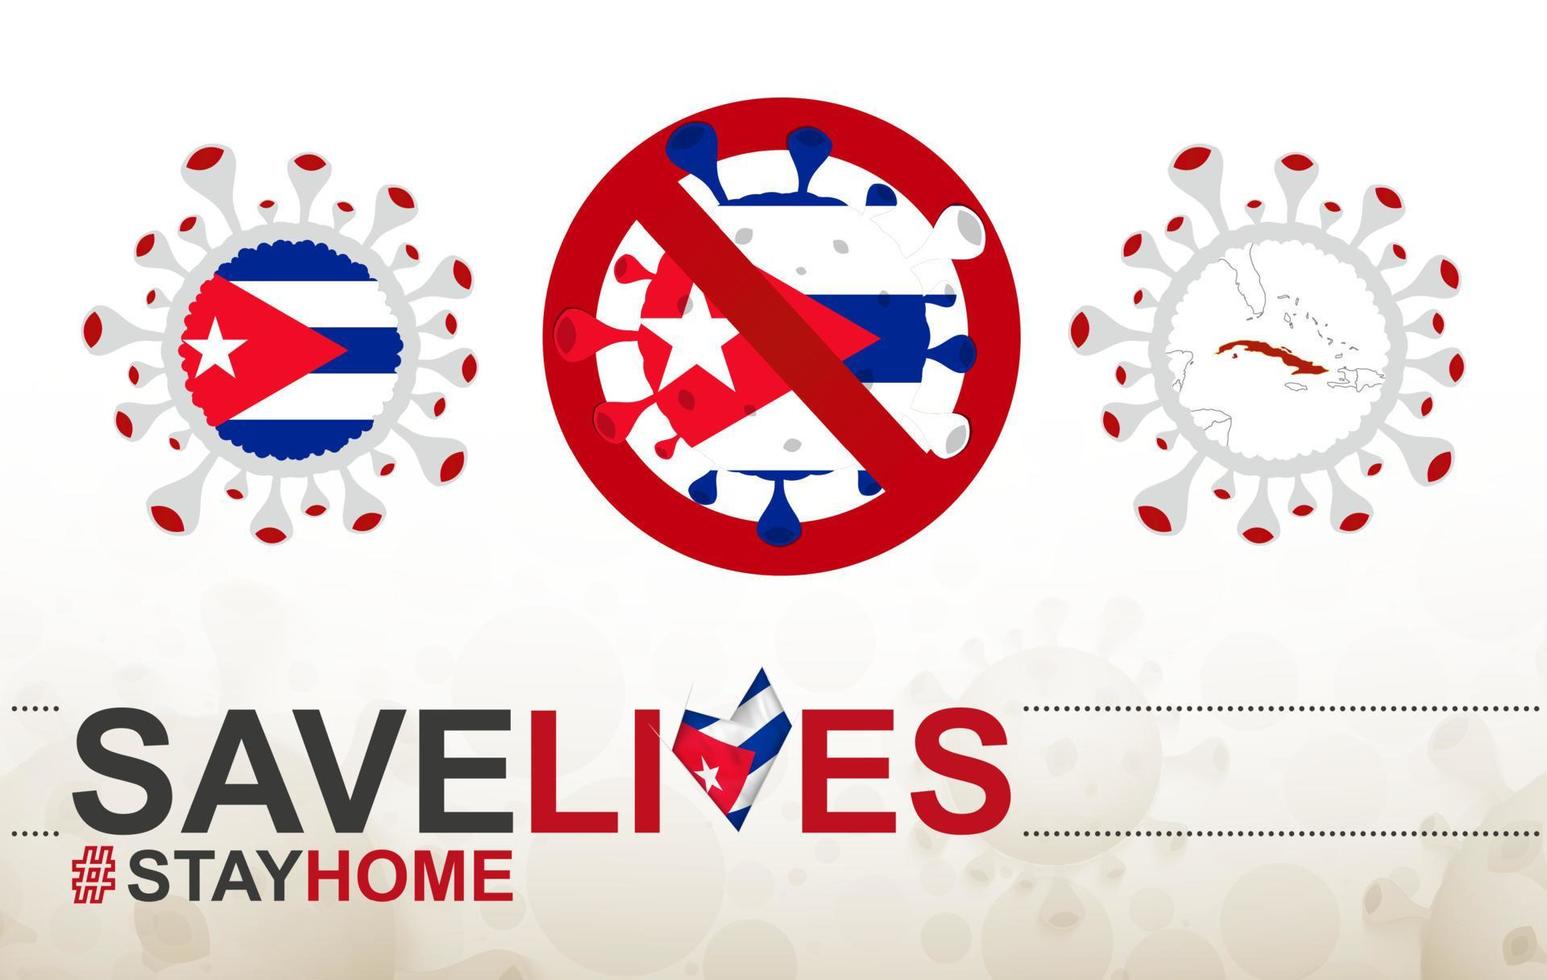 Coronavirus-Zelle mit Kuba-Flagge und Karte. Stop-Covid-19-Schild, Slogan Save Lives Stay Home mit Flagge Kubas vektor